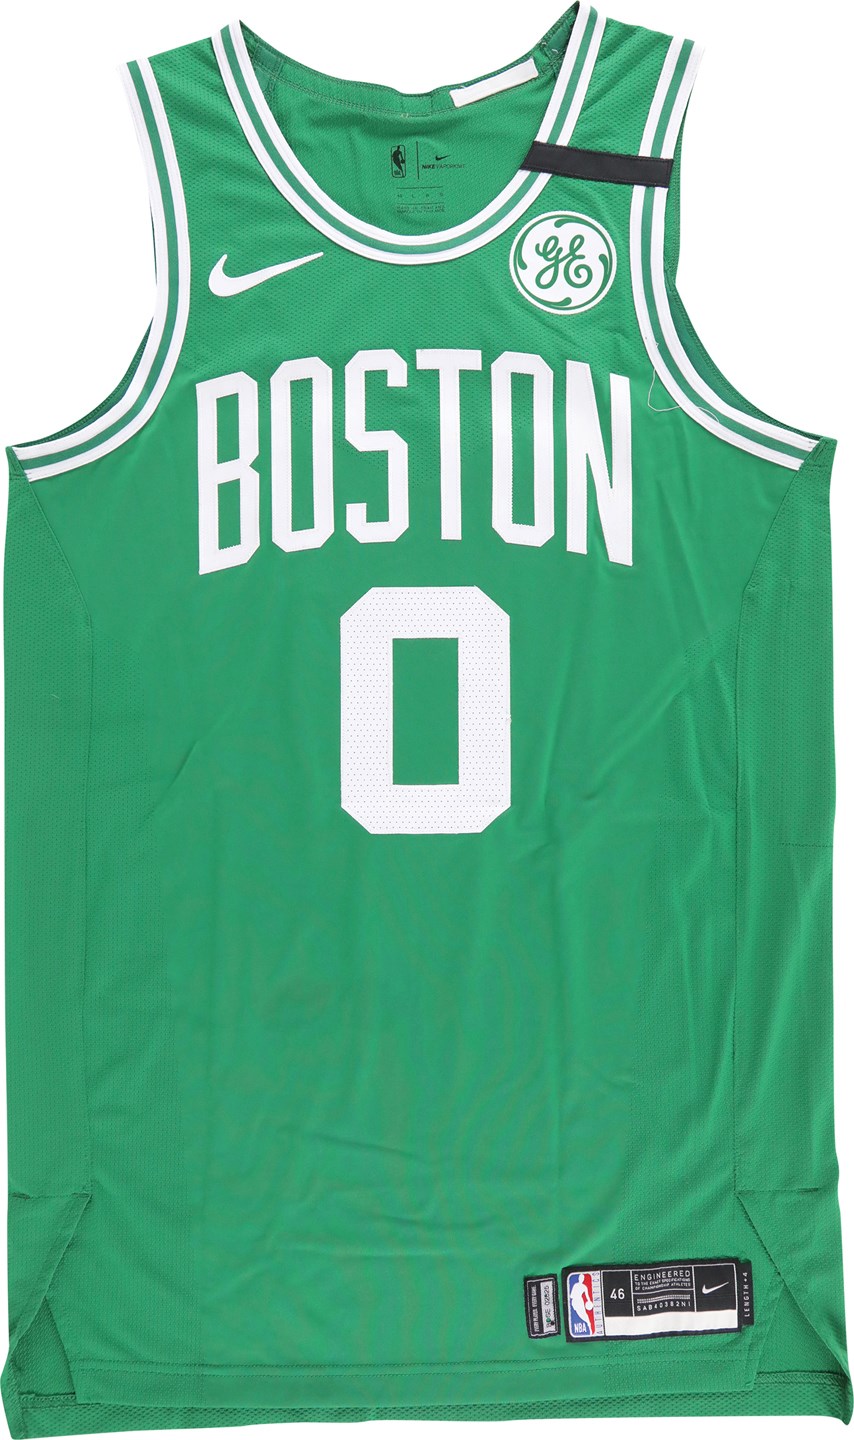 - 2020 Jayson Tatum Boston Celtics Game Worn Jersey (Fanatics)